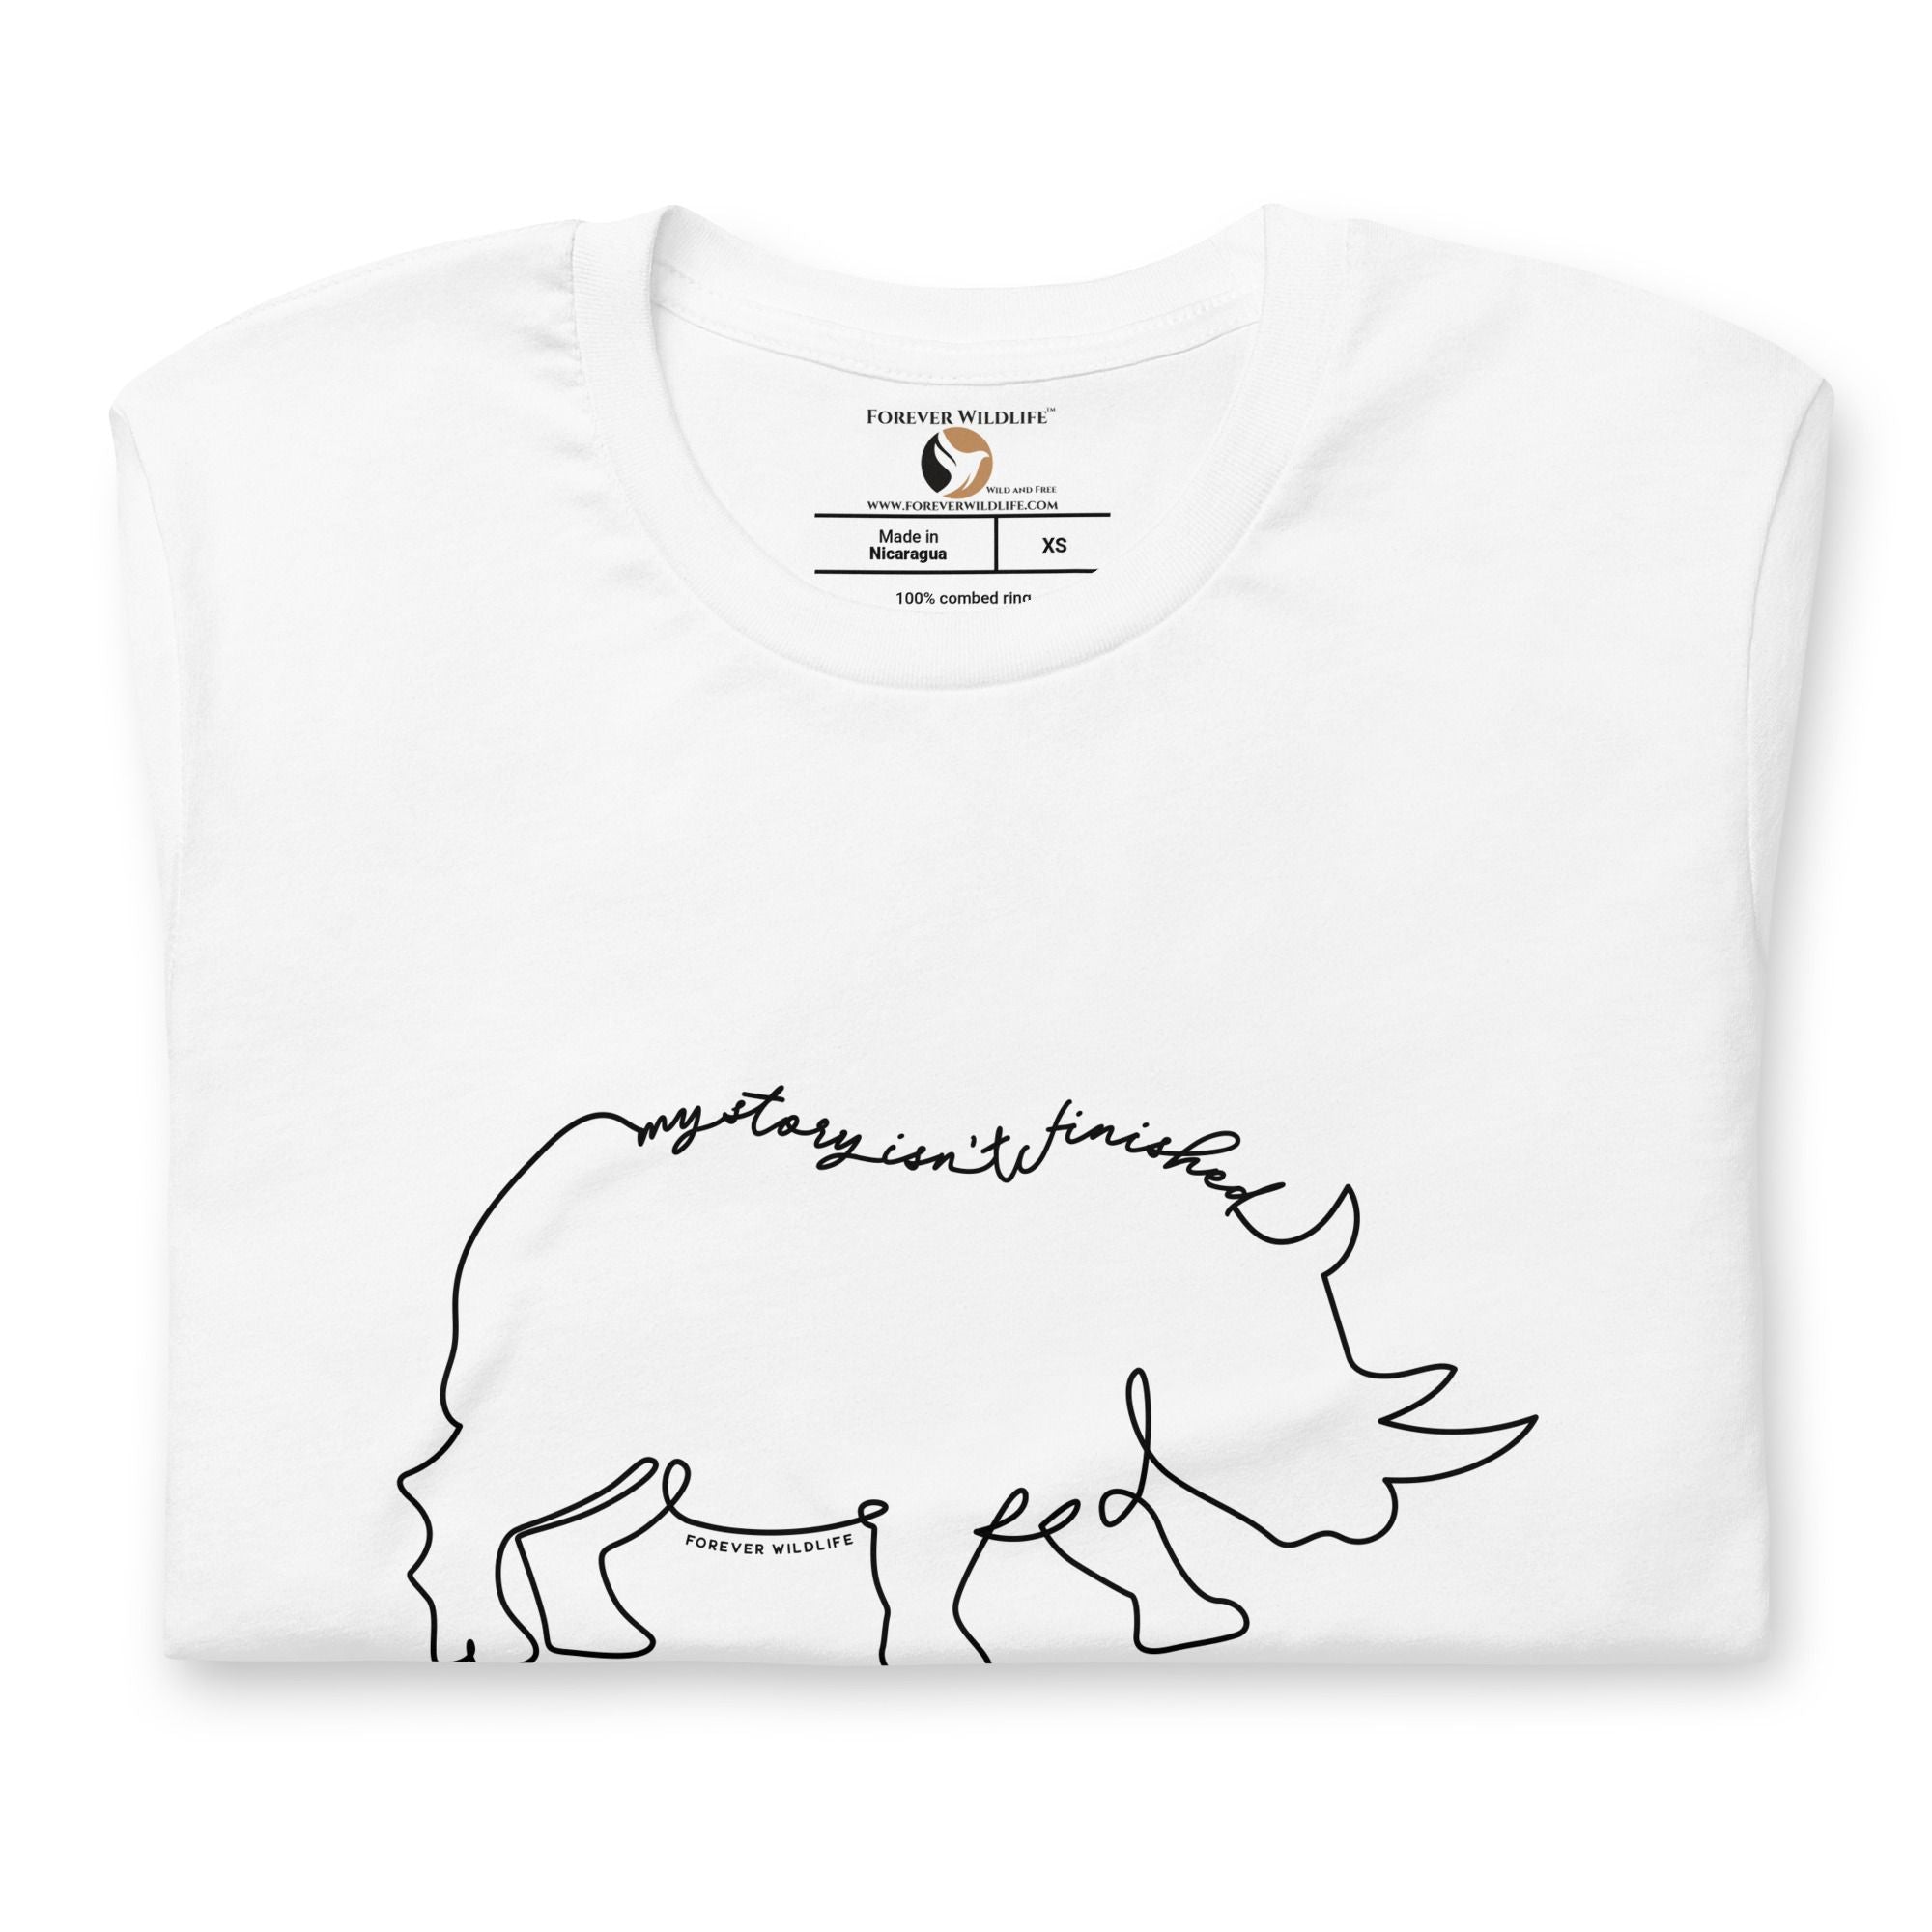 Rhino T-Shirt in White – Premium Wildlife T-Shirt Design with My Story Isn't Finished Text, Rhino Shirts and Wildlife Clothing